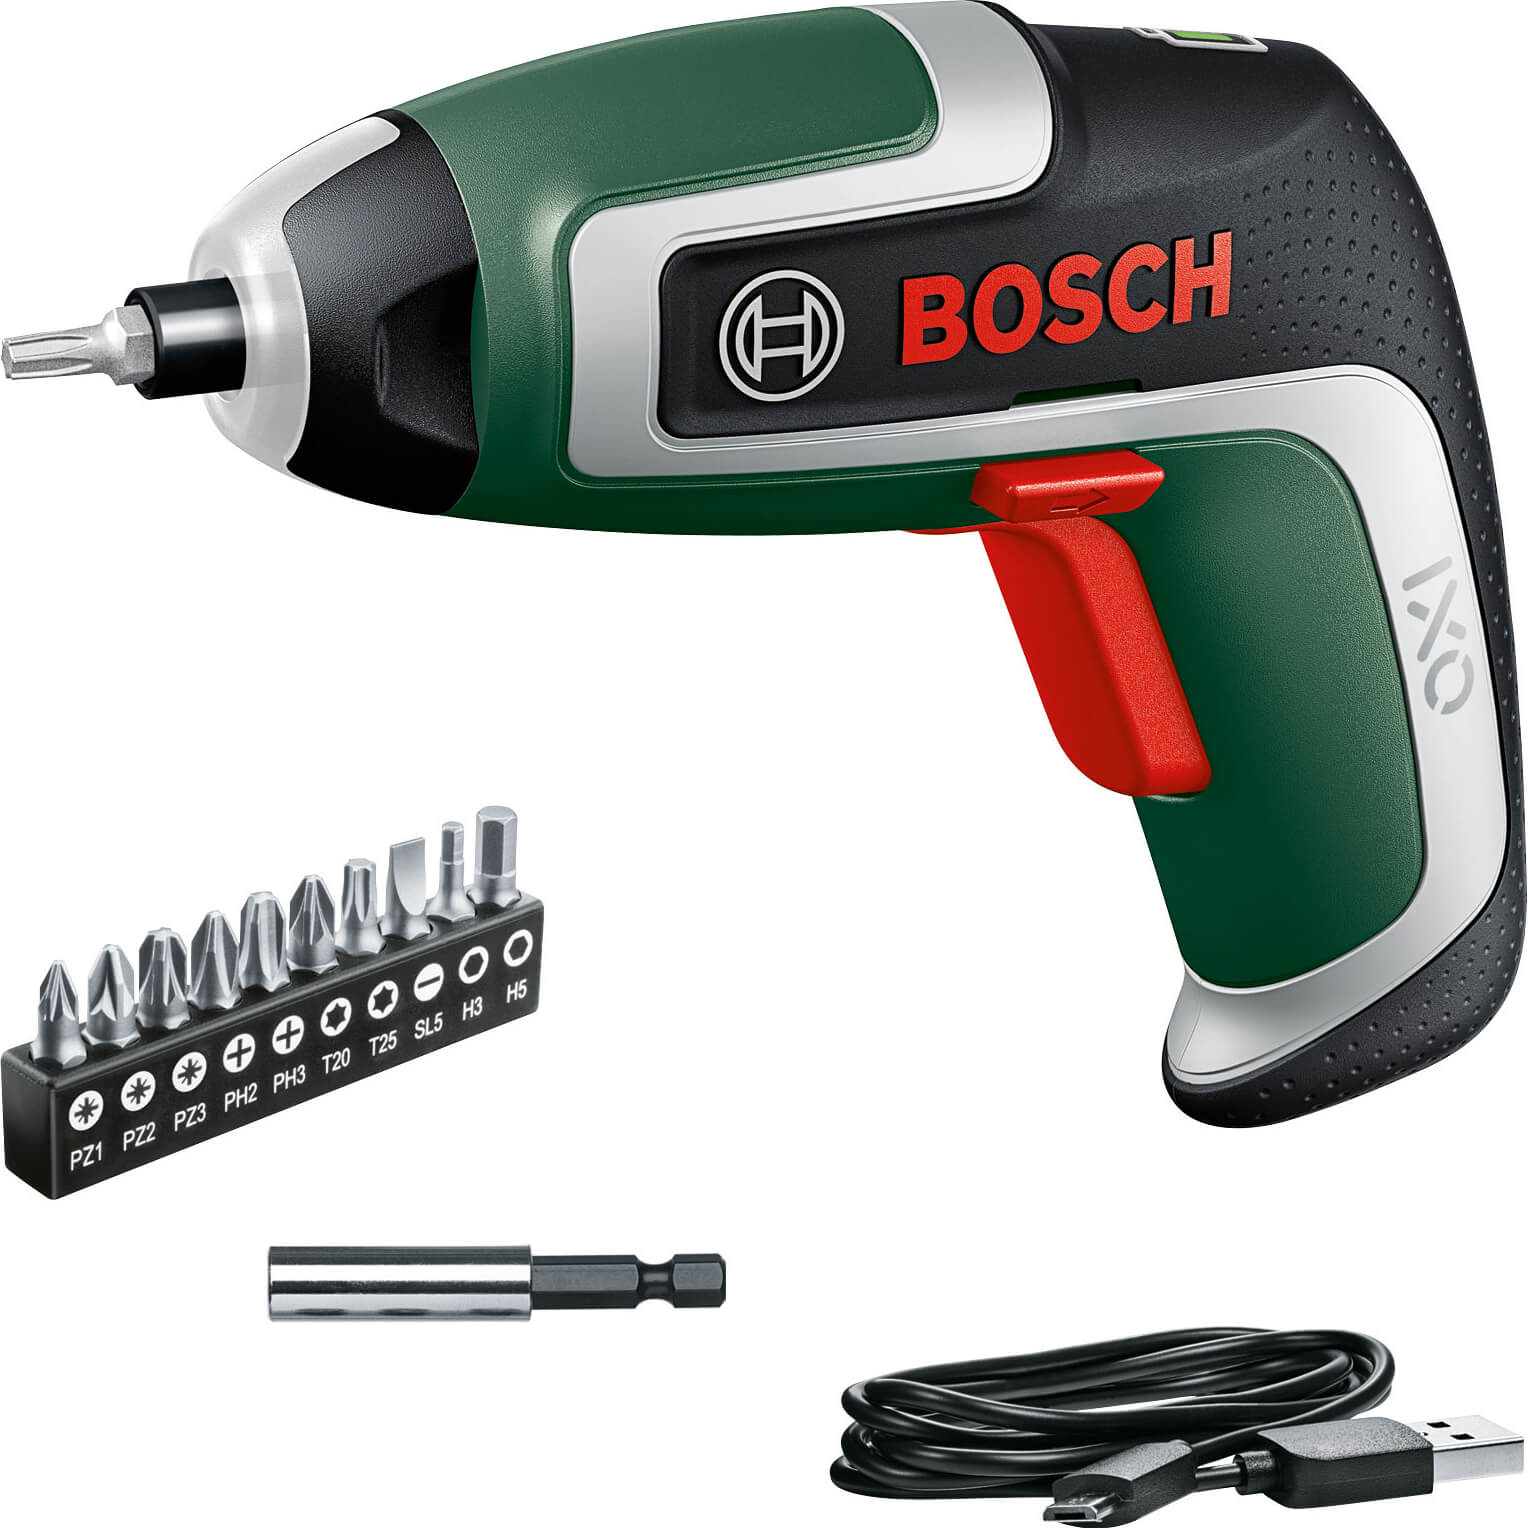 Bosch Ixo Vii Basic 36v Cordless Screwdriver Electric Screwdrivers